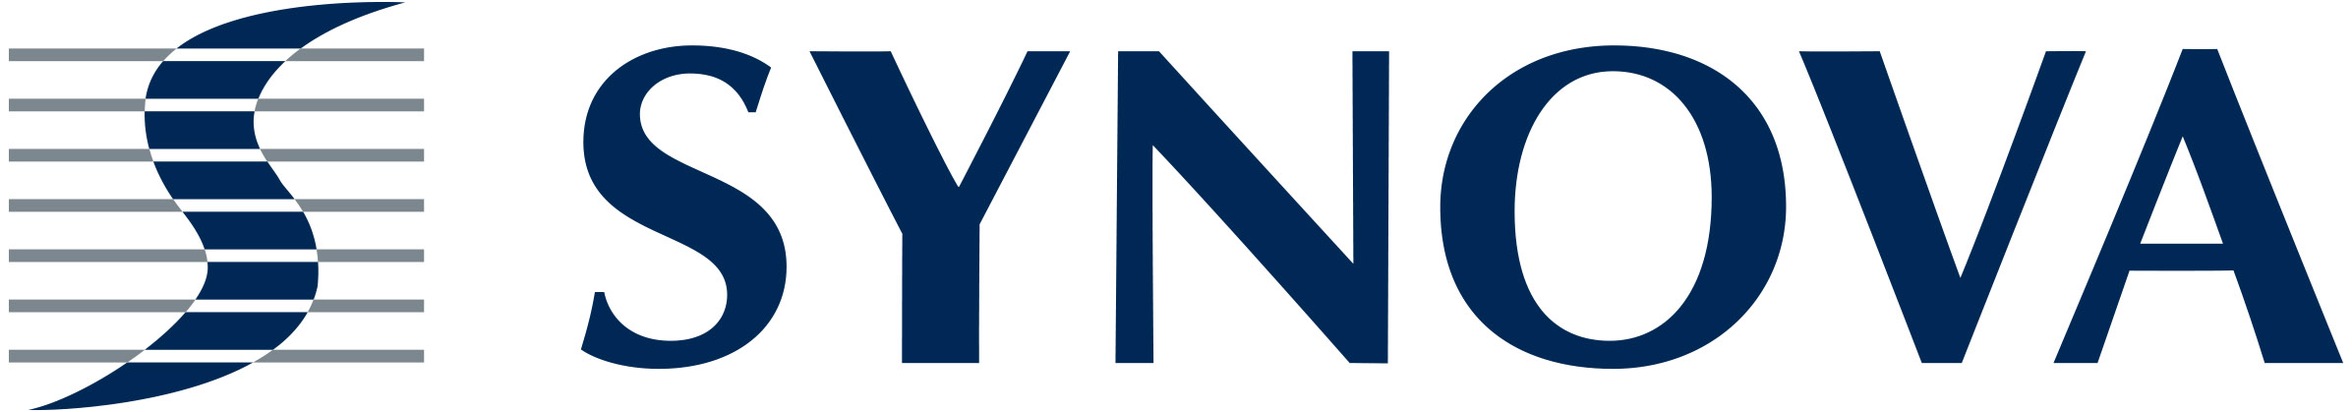 Synova Appoints Scott Fosdick as Senior Vice President of Sales, Marketing and Customer Service